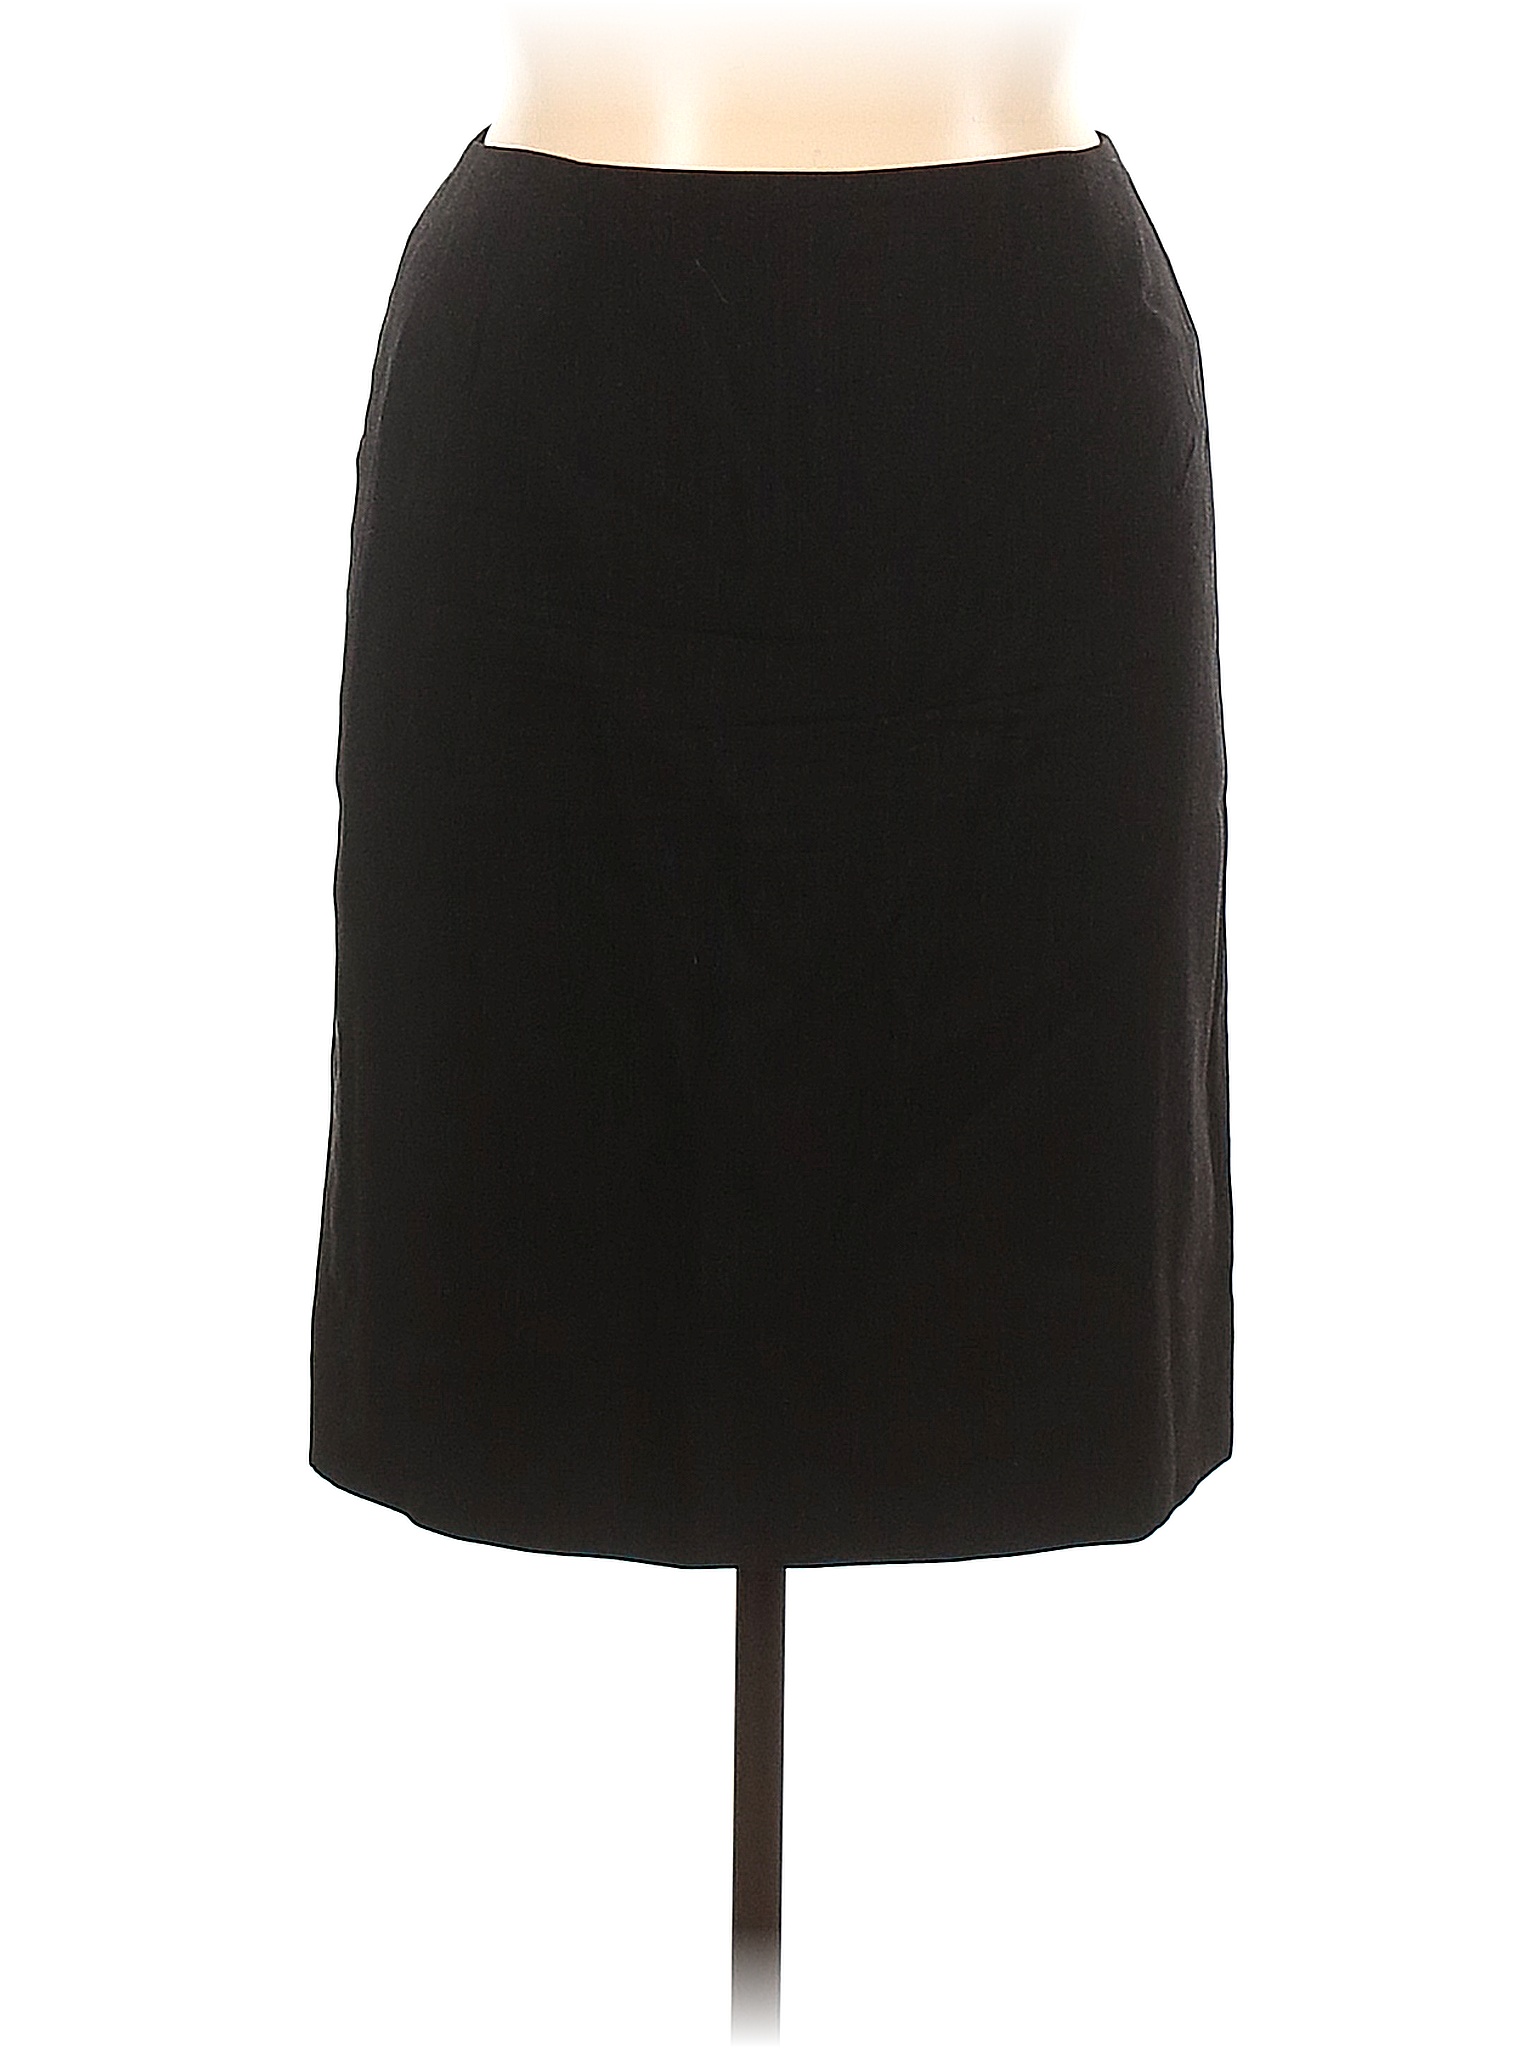 Dana Buchman 100% Wool Solid Black Wool Skirt Size 14 - 88% off | thredUP